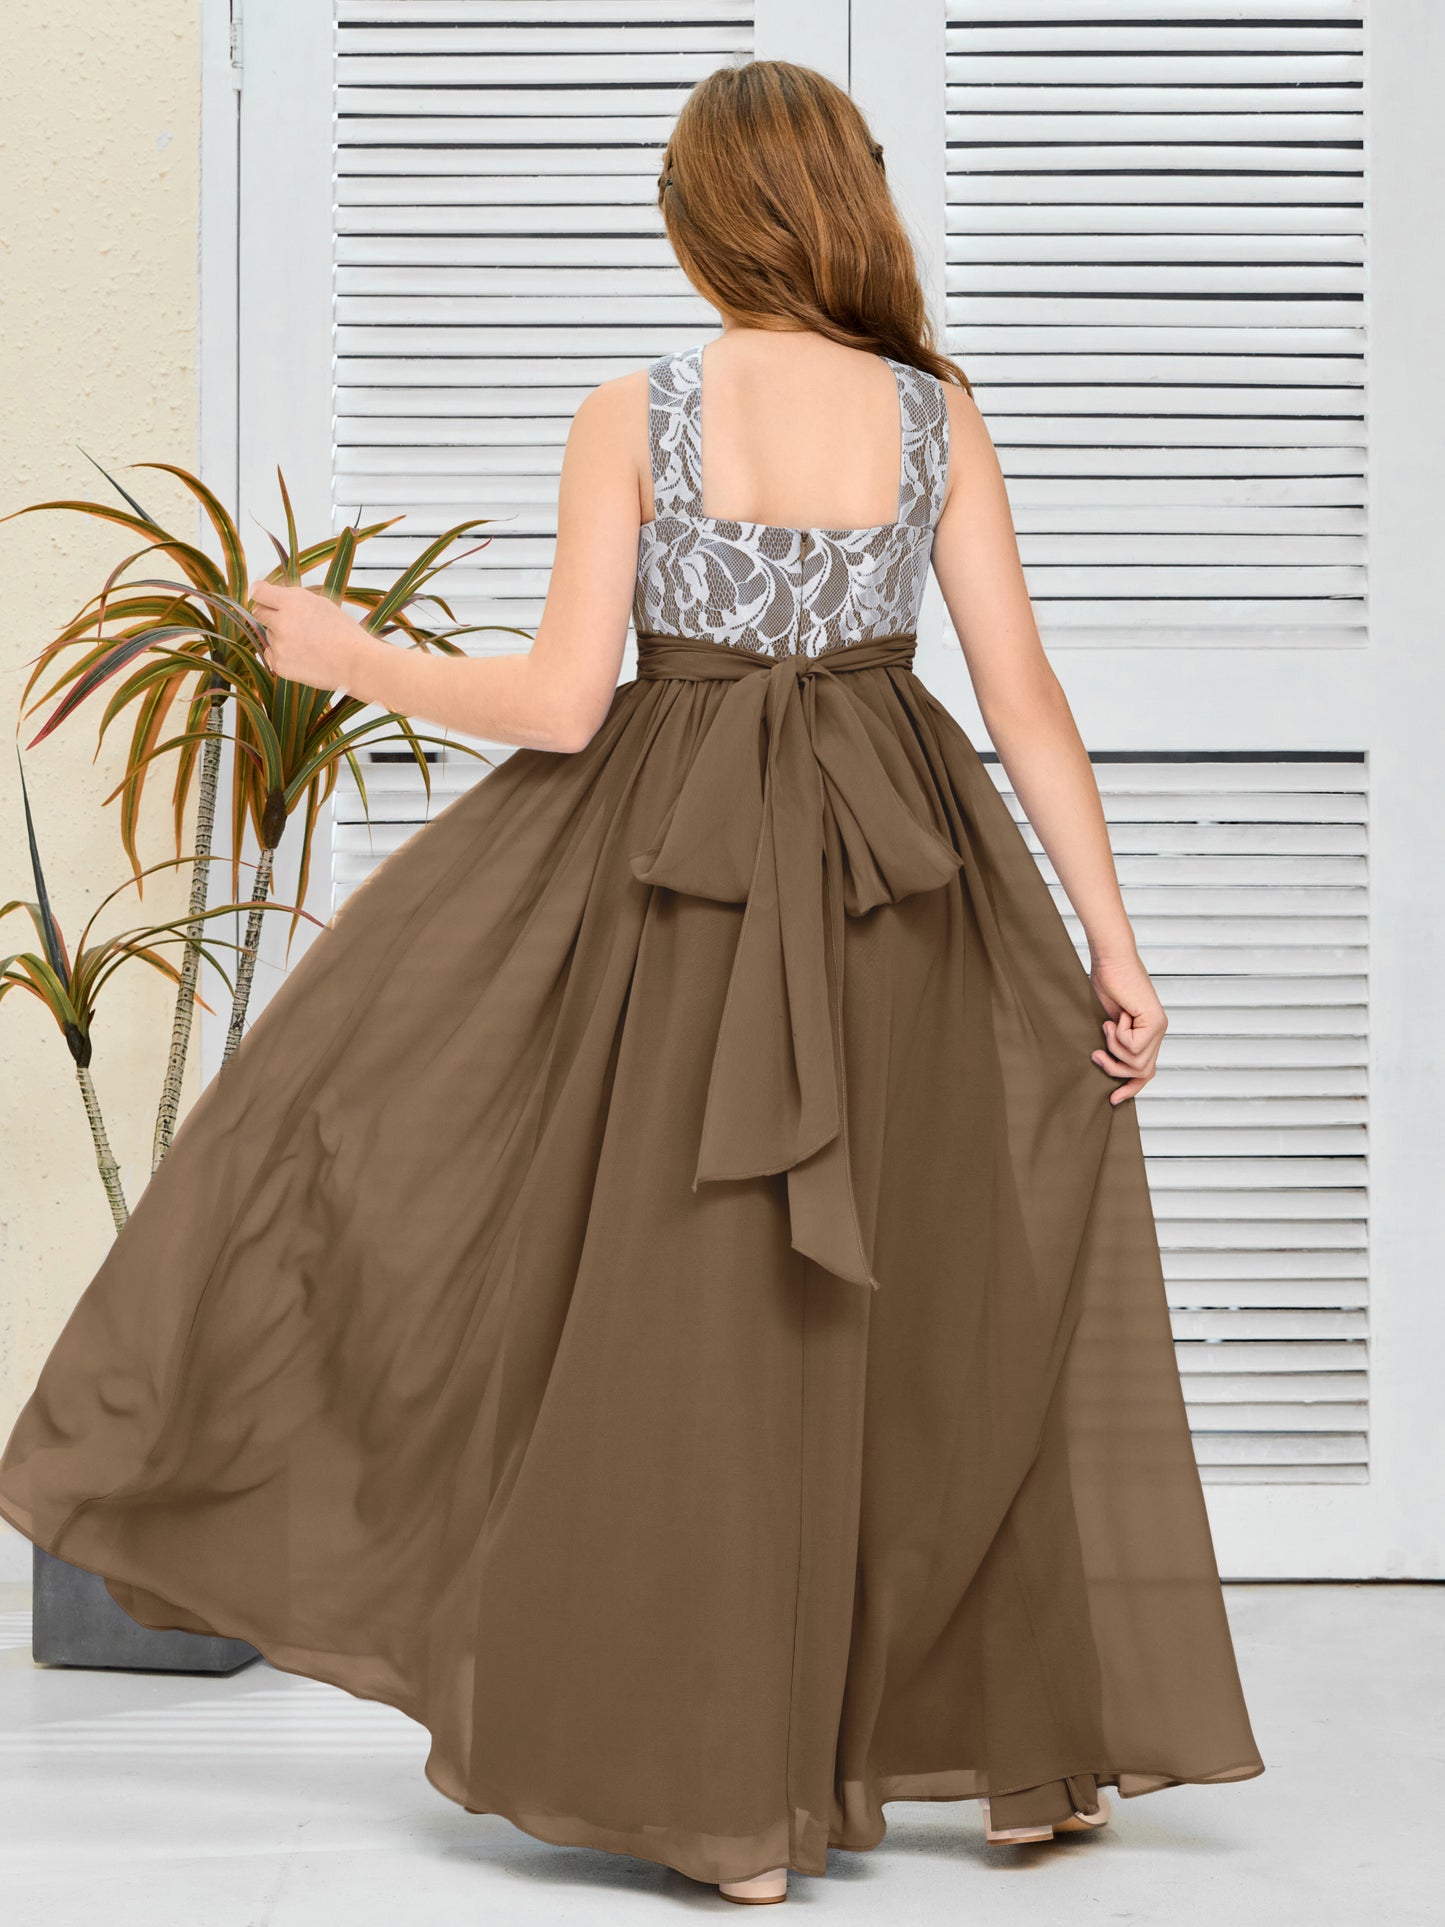 Sleeveless A Line Chiffon Lace Junior Bridesmaid Dress